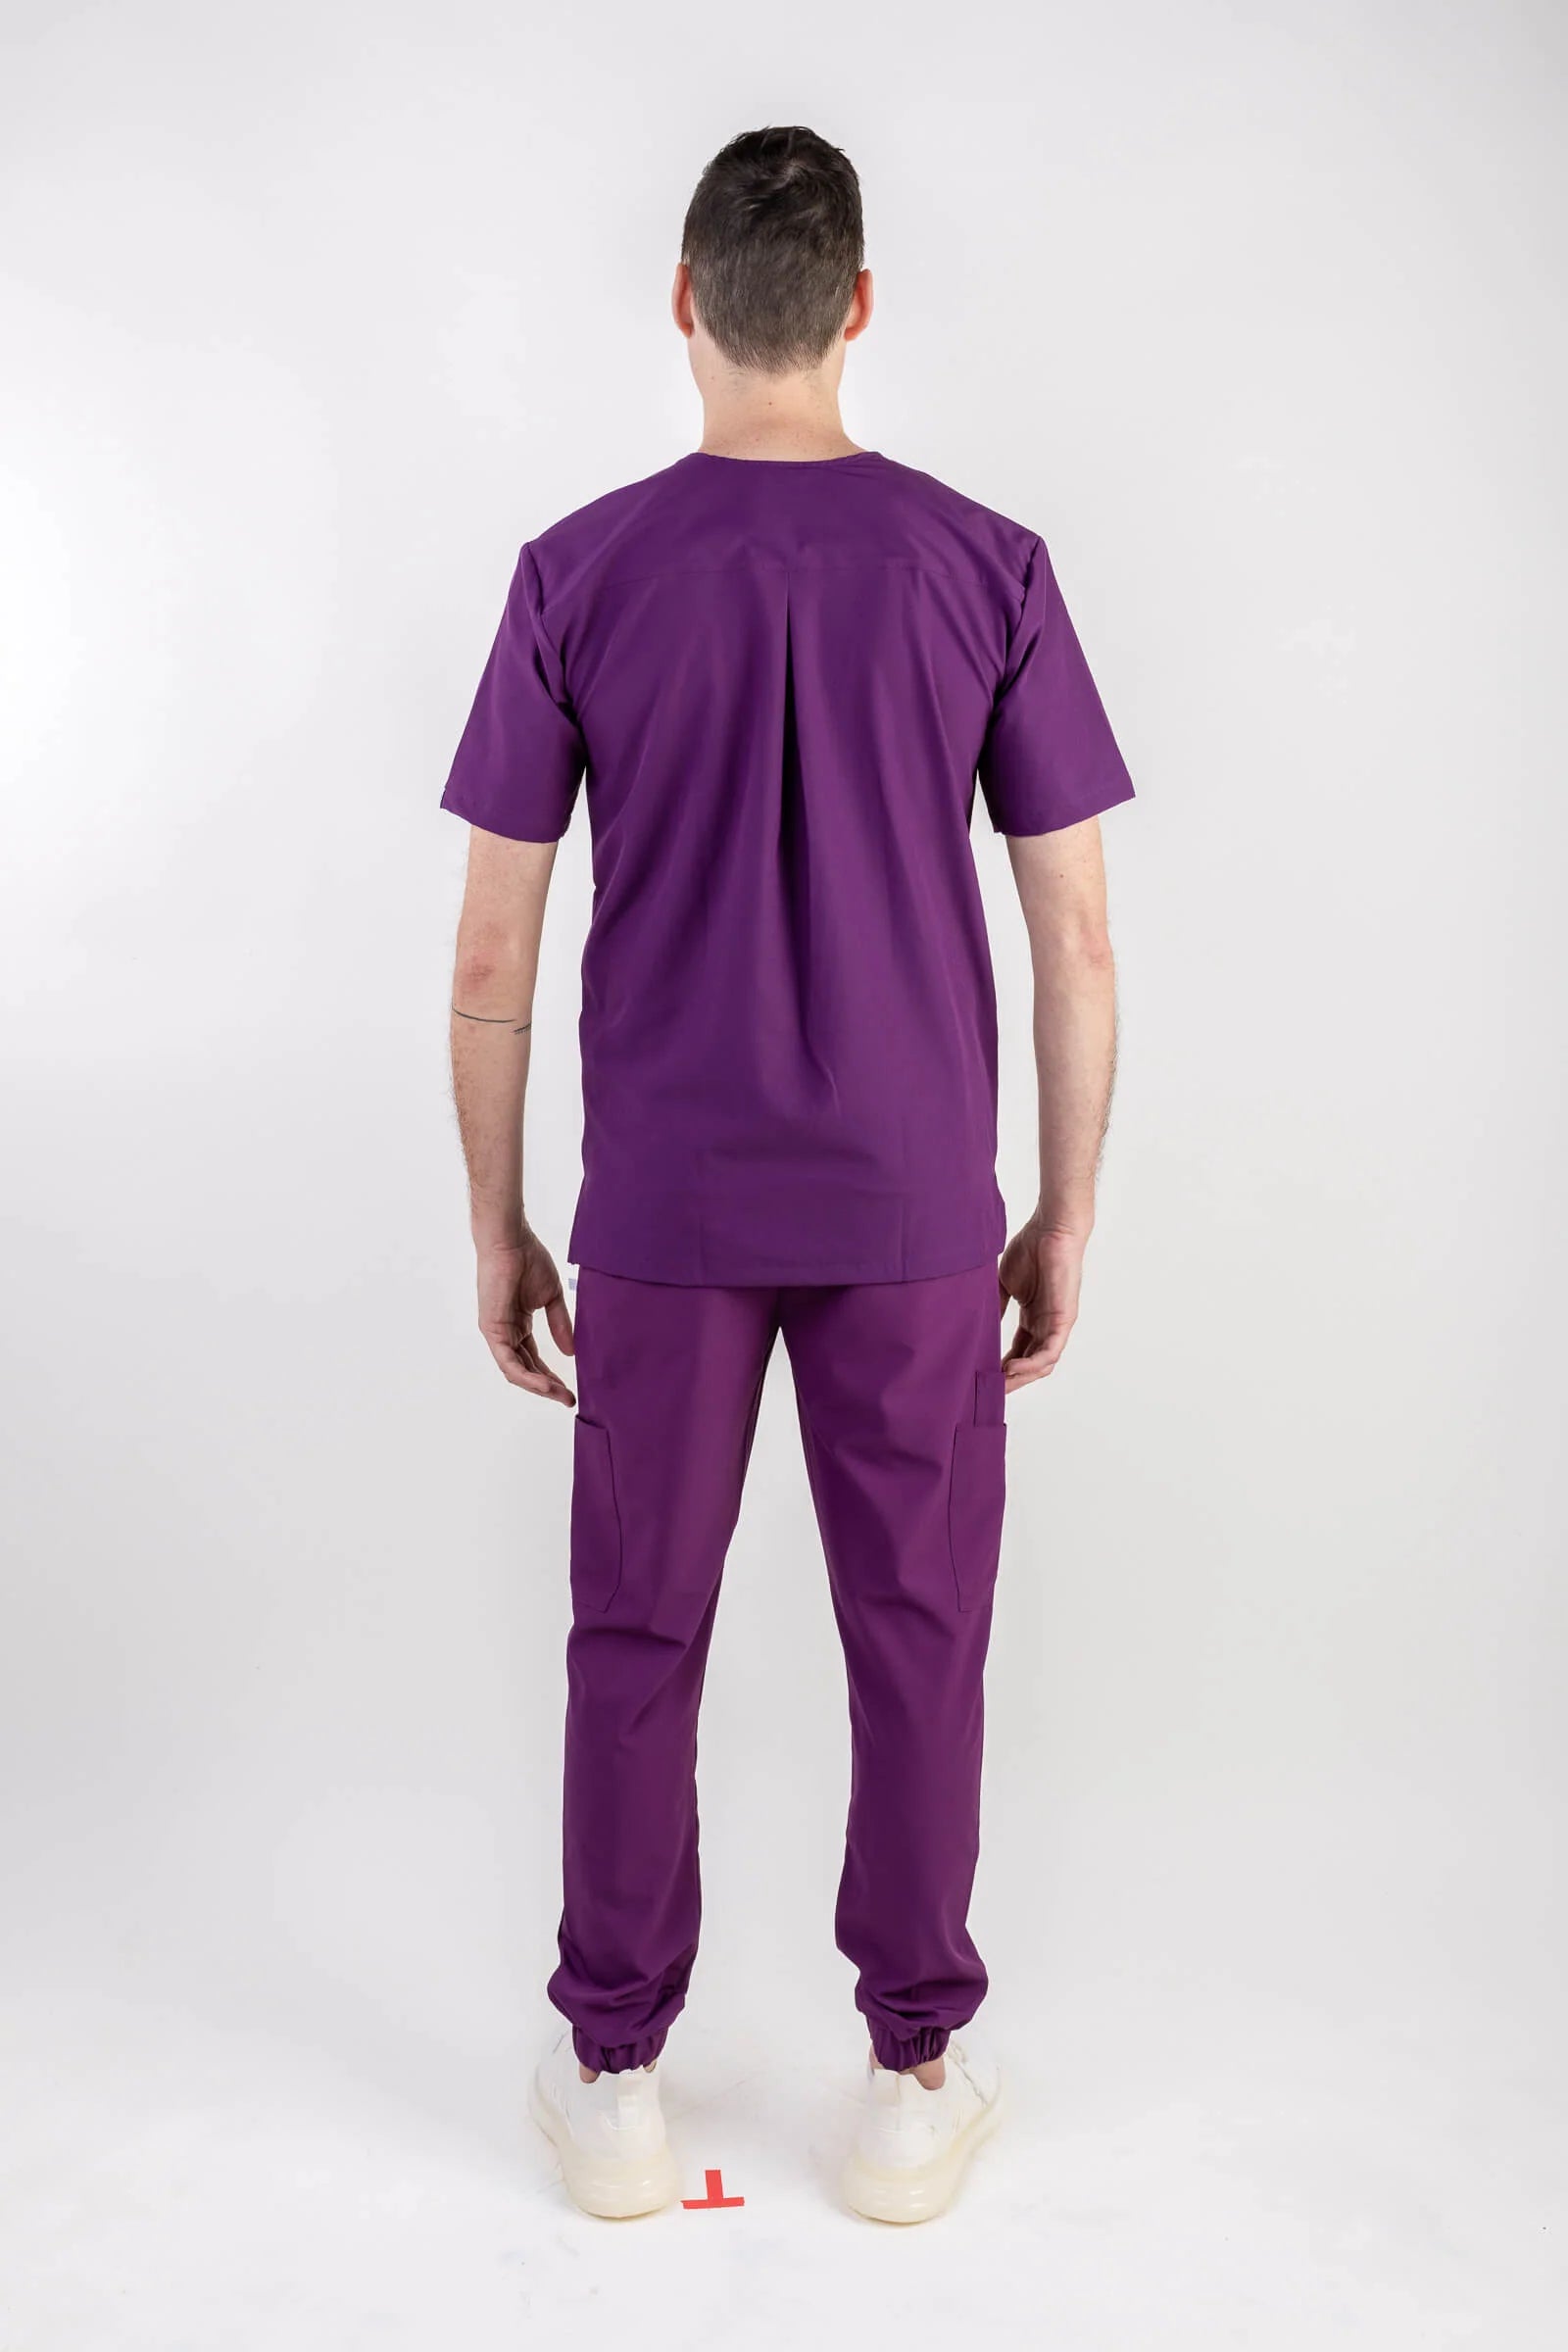 Pijama quirúrgica U-niform mod. Alexandro